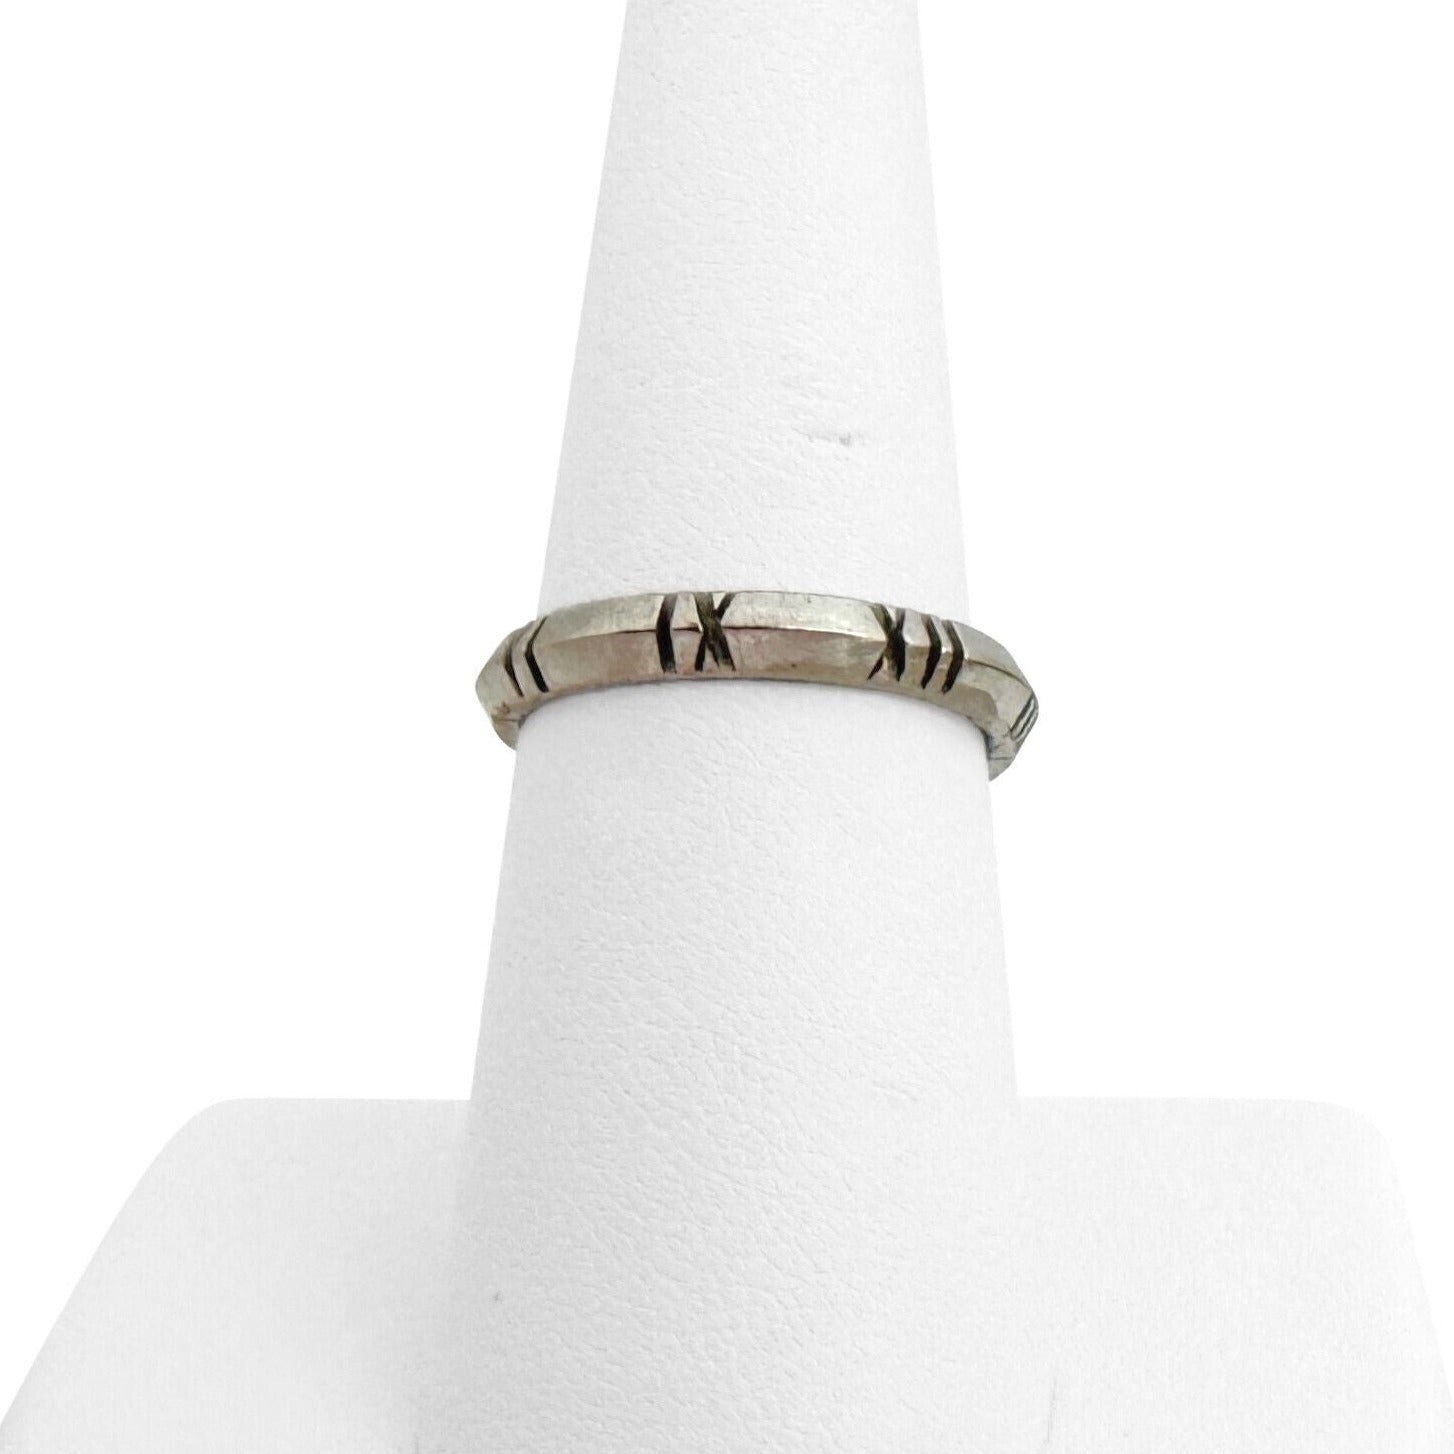 Tiffany & Co. 950 Platinum 0.61tcw Diamond Engagement Ring Size 4.25 ( –  Chorost & Co.